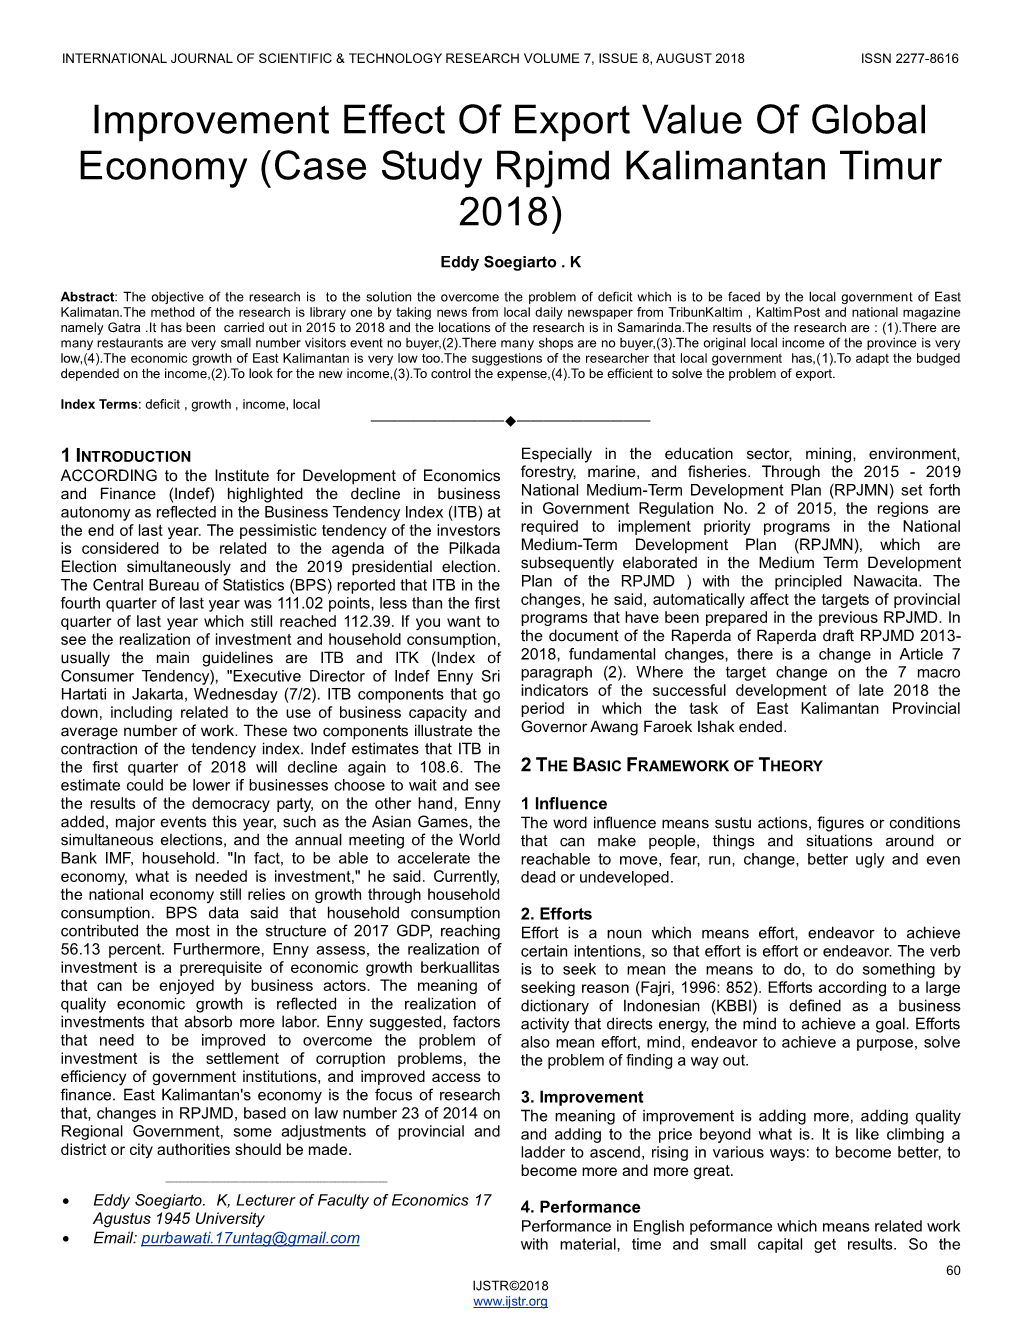 Improvement Effect of Export Value of Global Economy (Case Study Rpjmd Kalimantan Timur 2018)